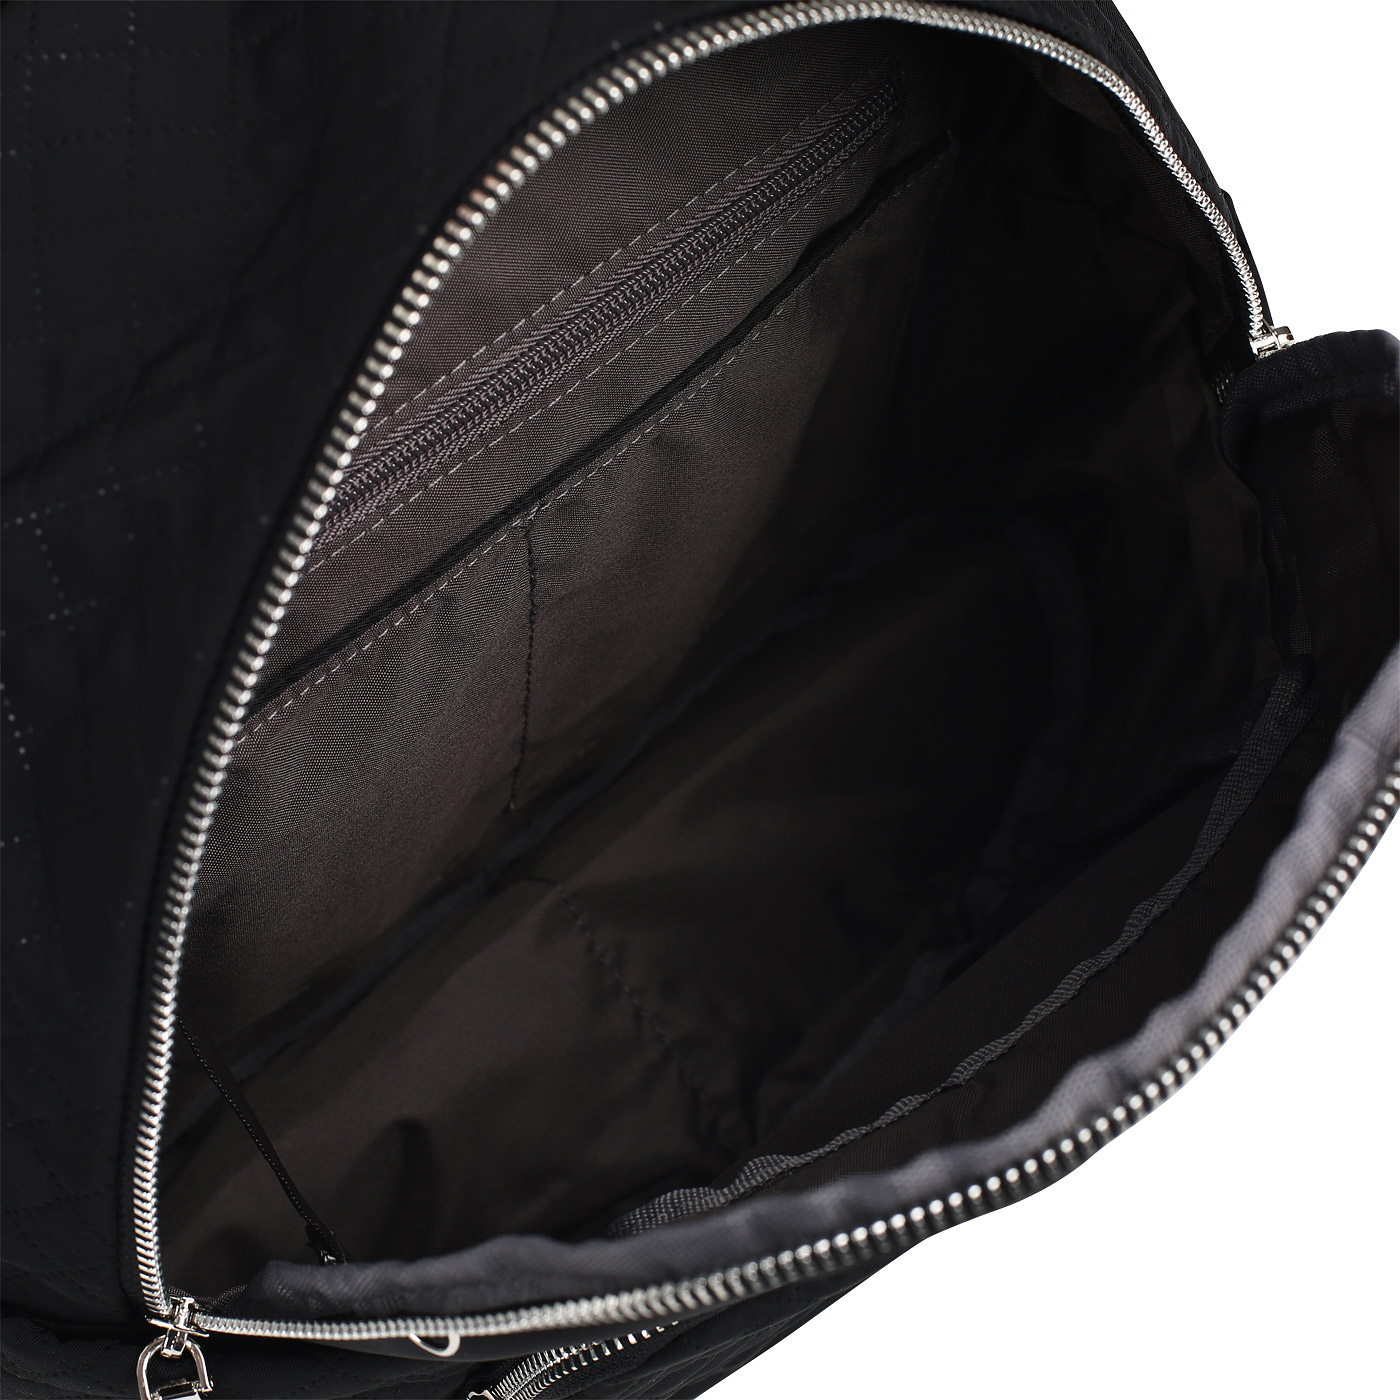 Нейлоновый женский рюкзак Eberhart Backpack